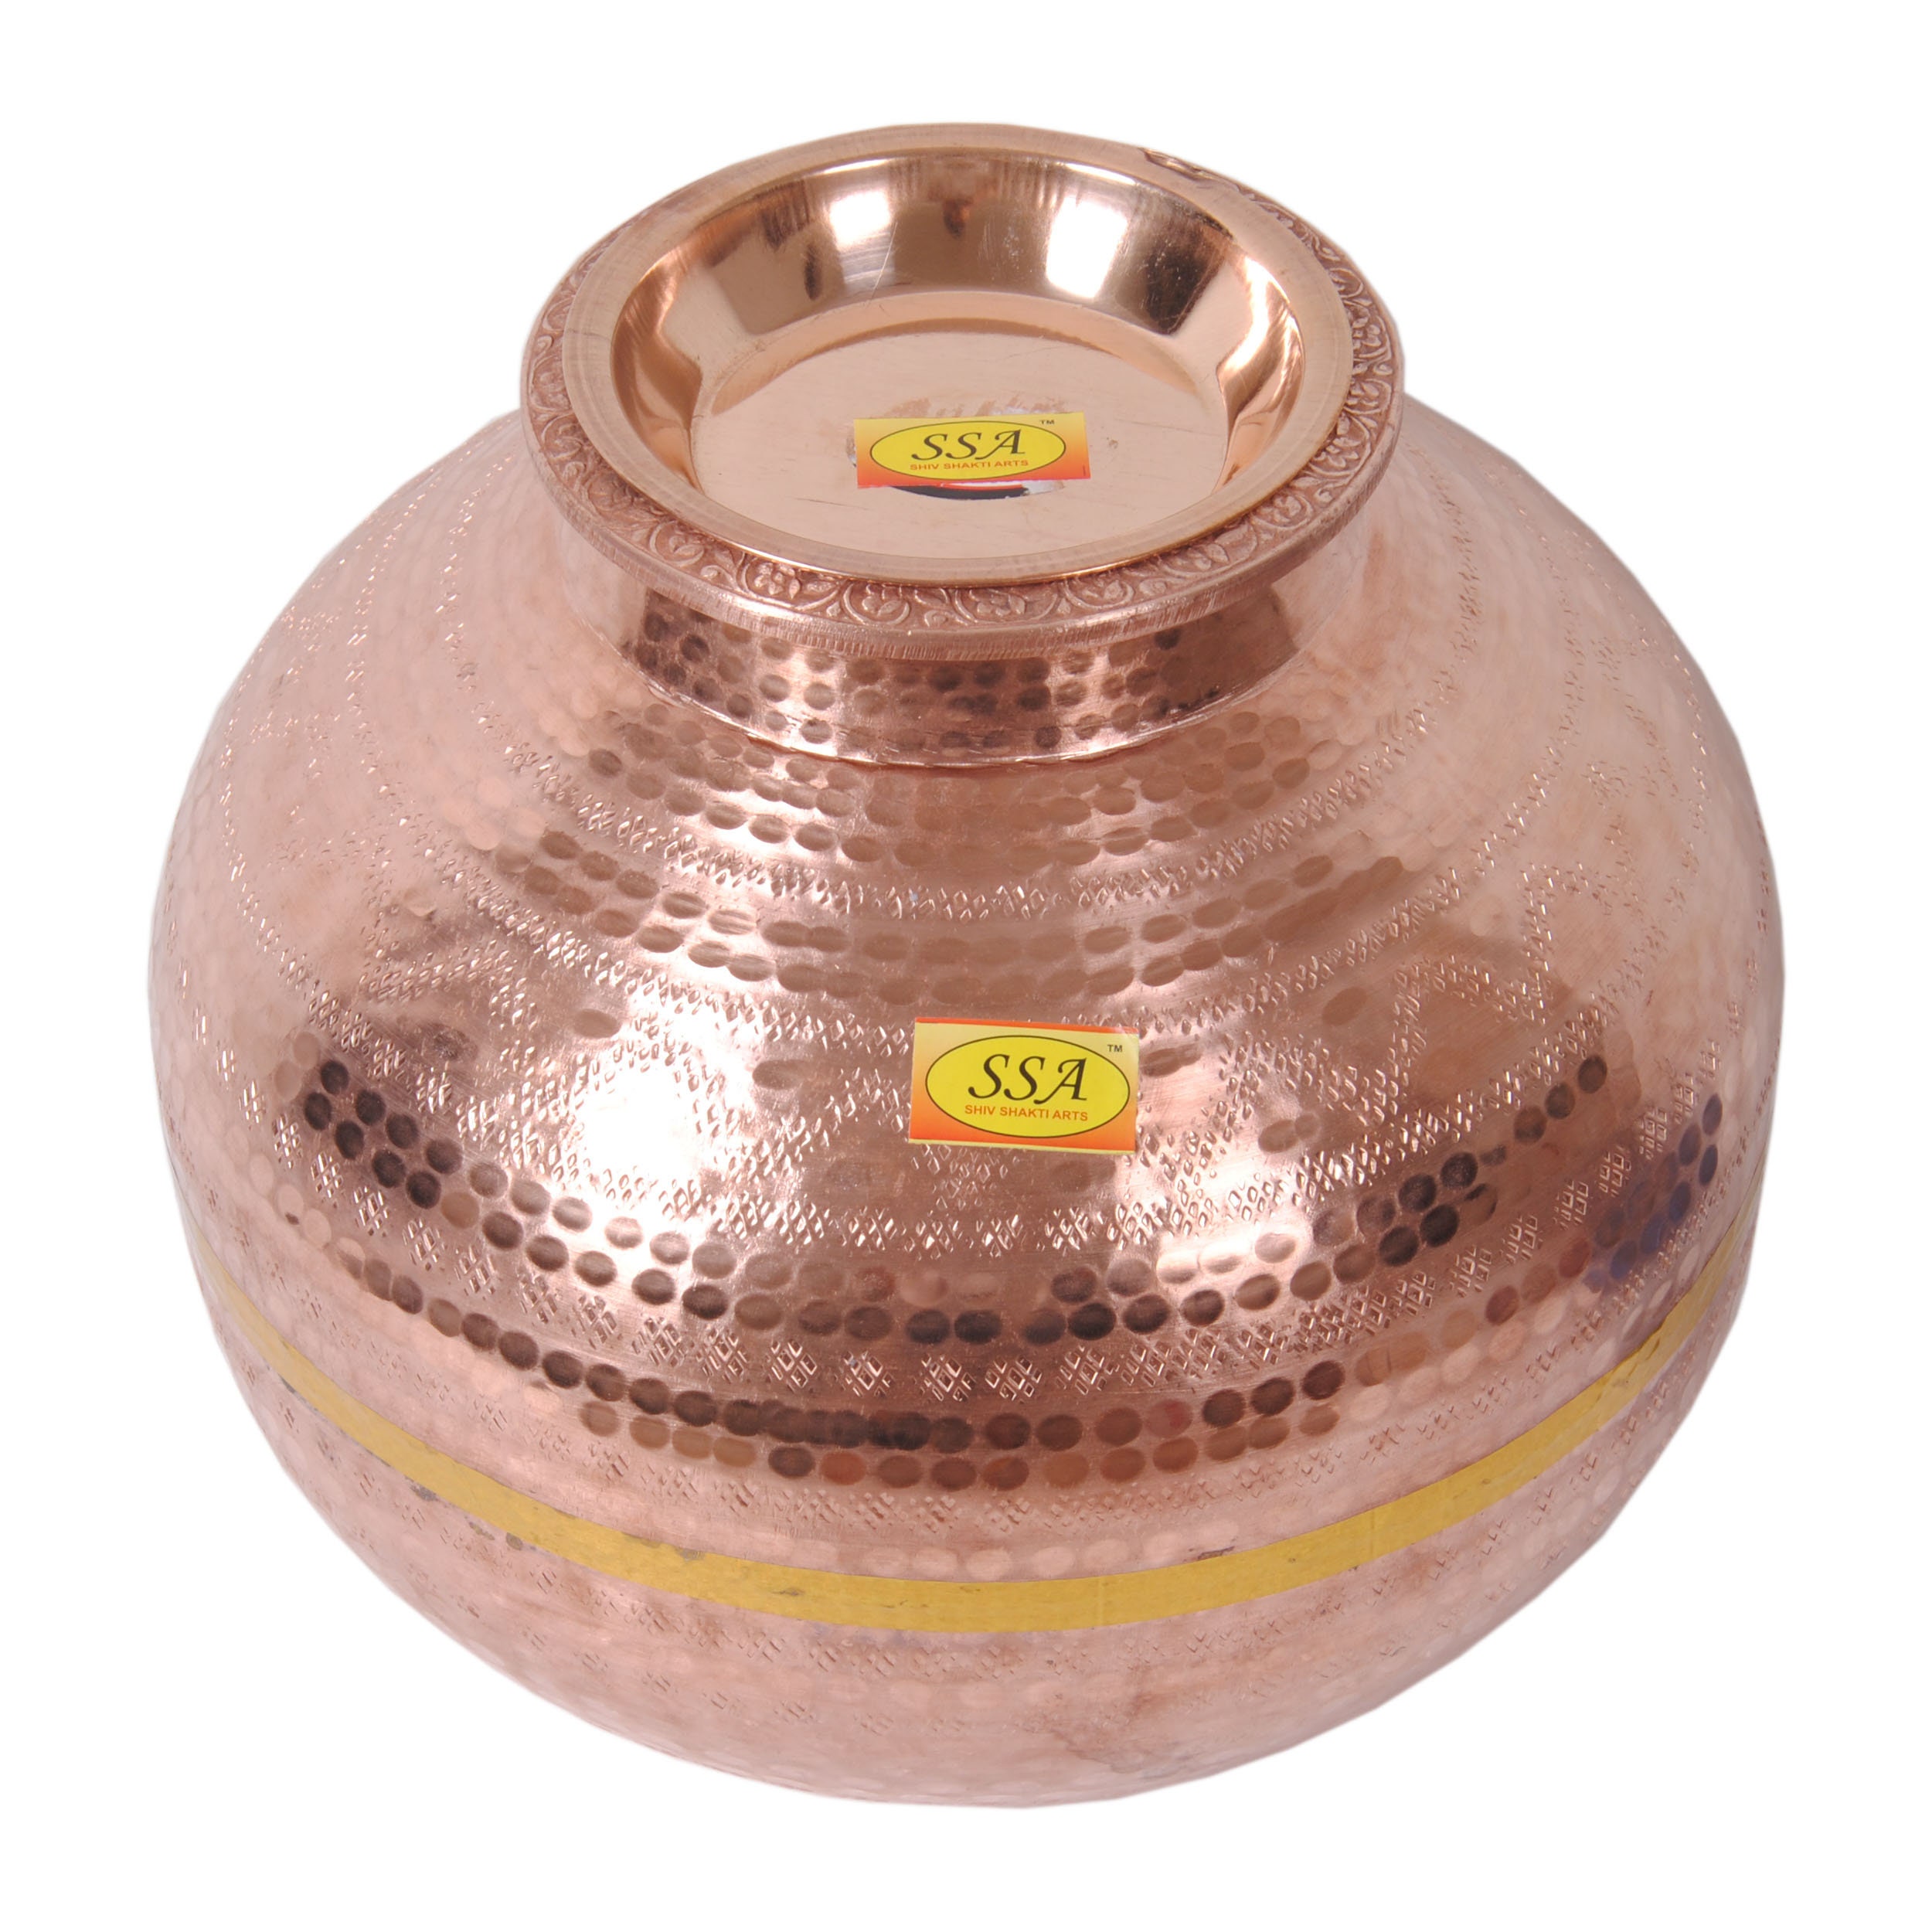 Leak Proof,100% Pure Copper Copper Matka/Pot 10 Liter Water Storing Capacity 